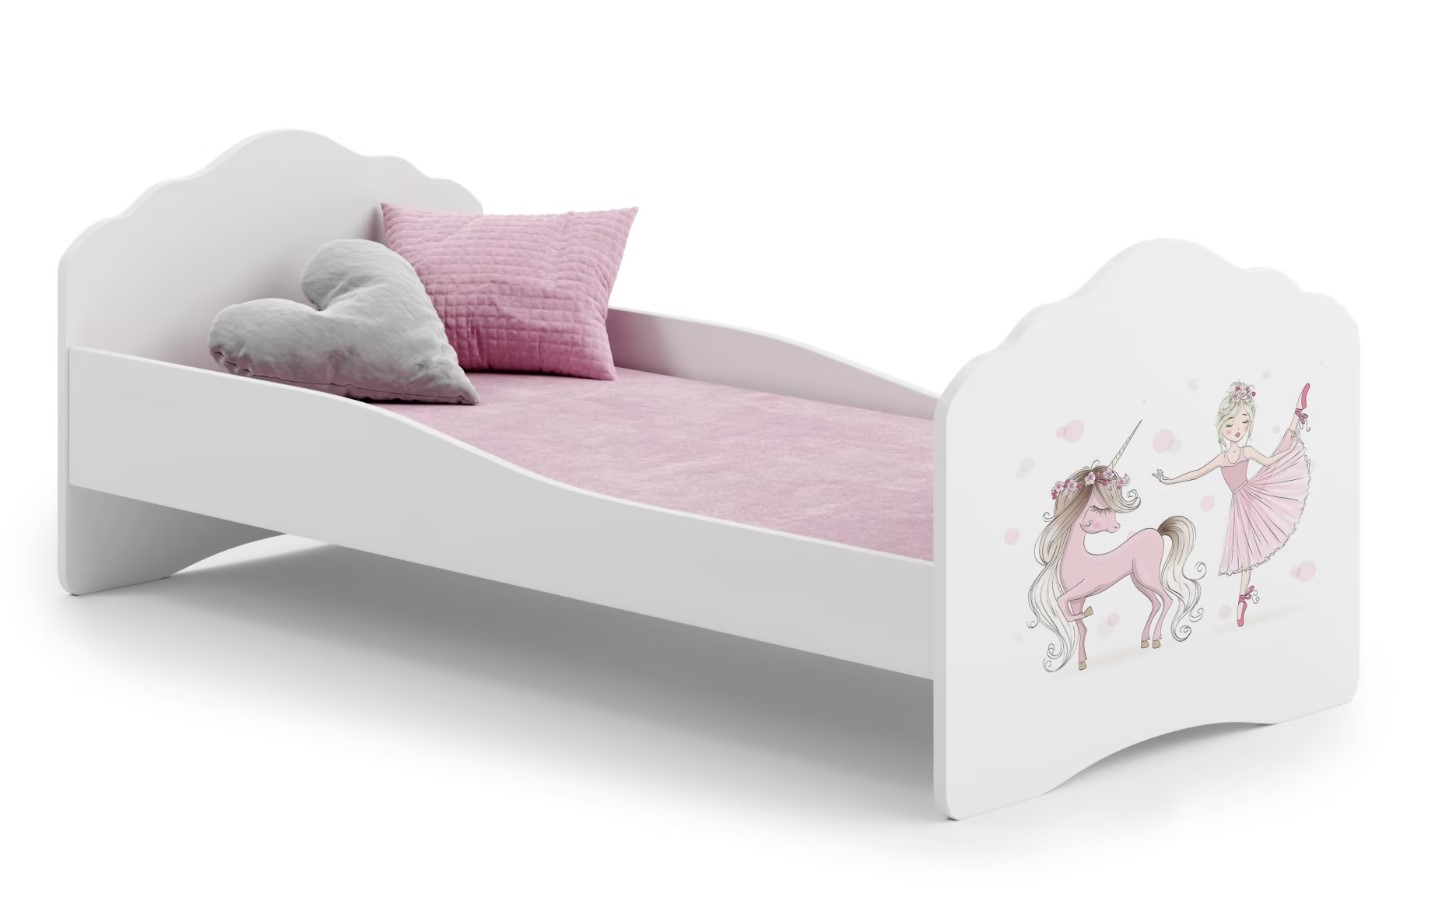 E-shop ArtAdrk Detská posteľ CASIMO | 80 x 160 cm Prevedenie: Balerína s jednorožcom